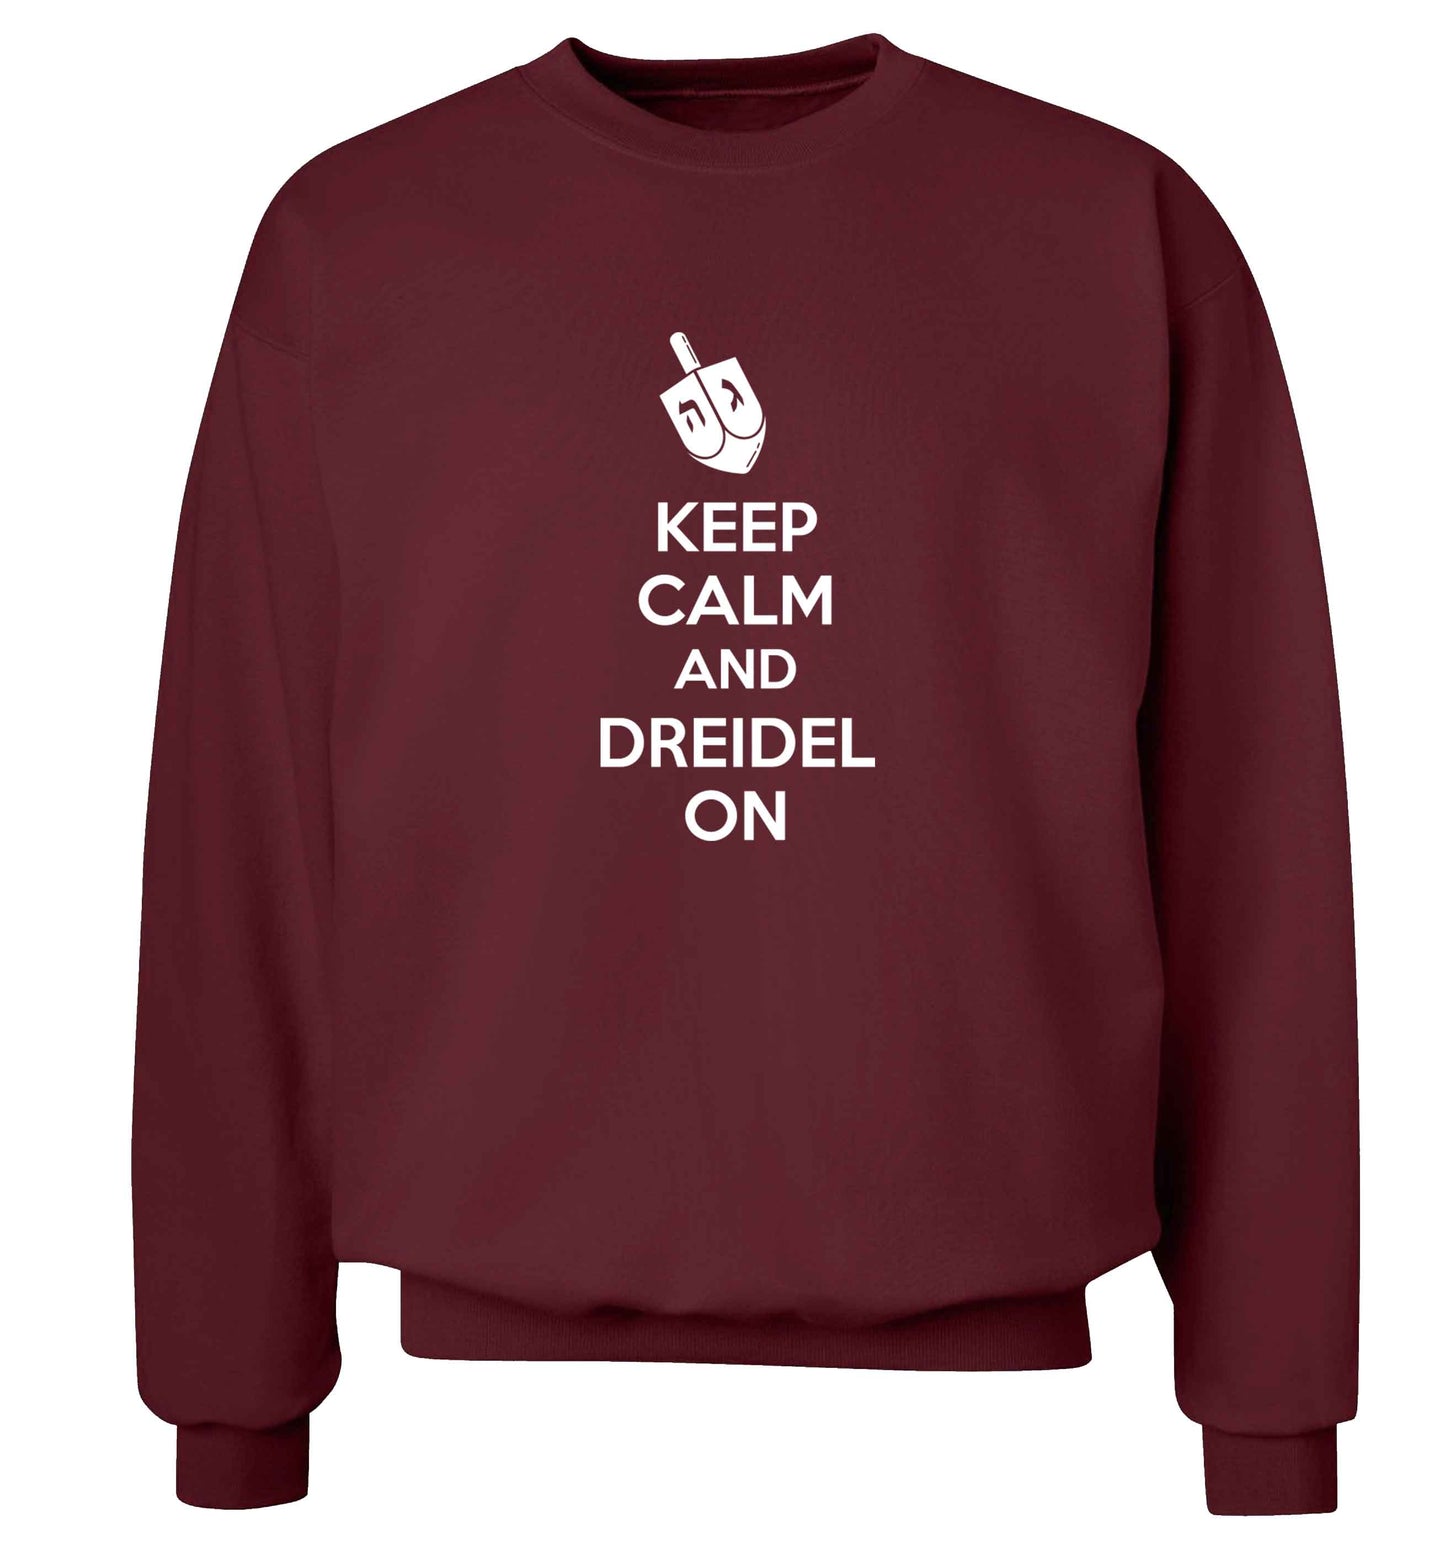 Keep calm and dreidel on adult's unisex maroon sweater 2XL